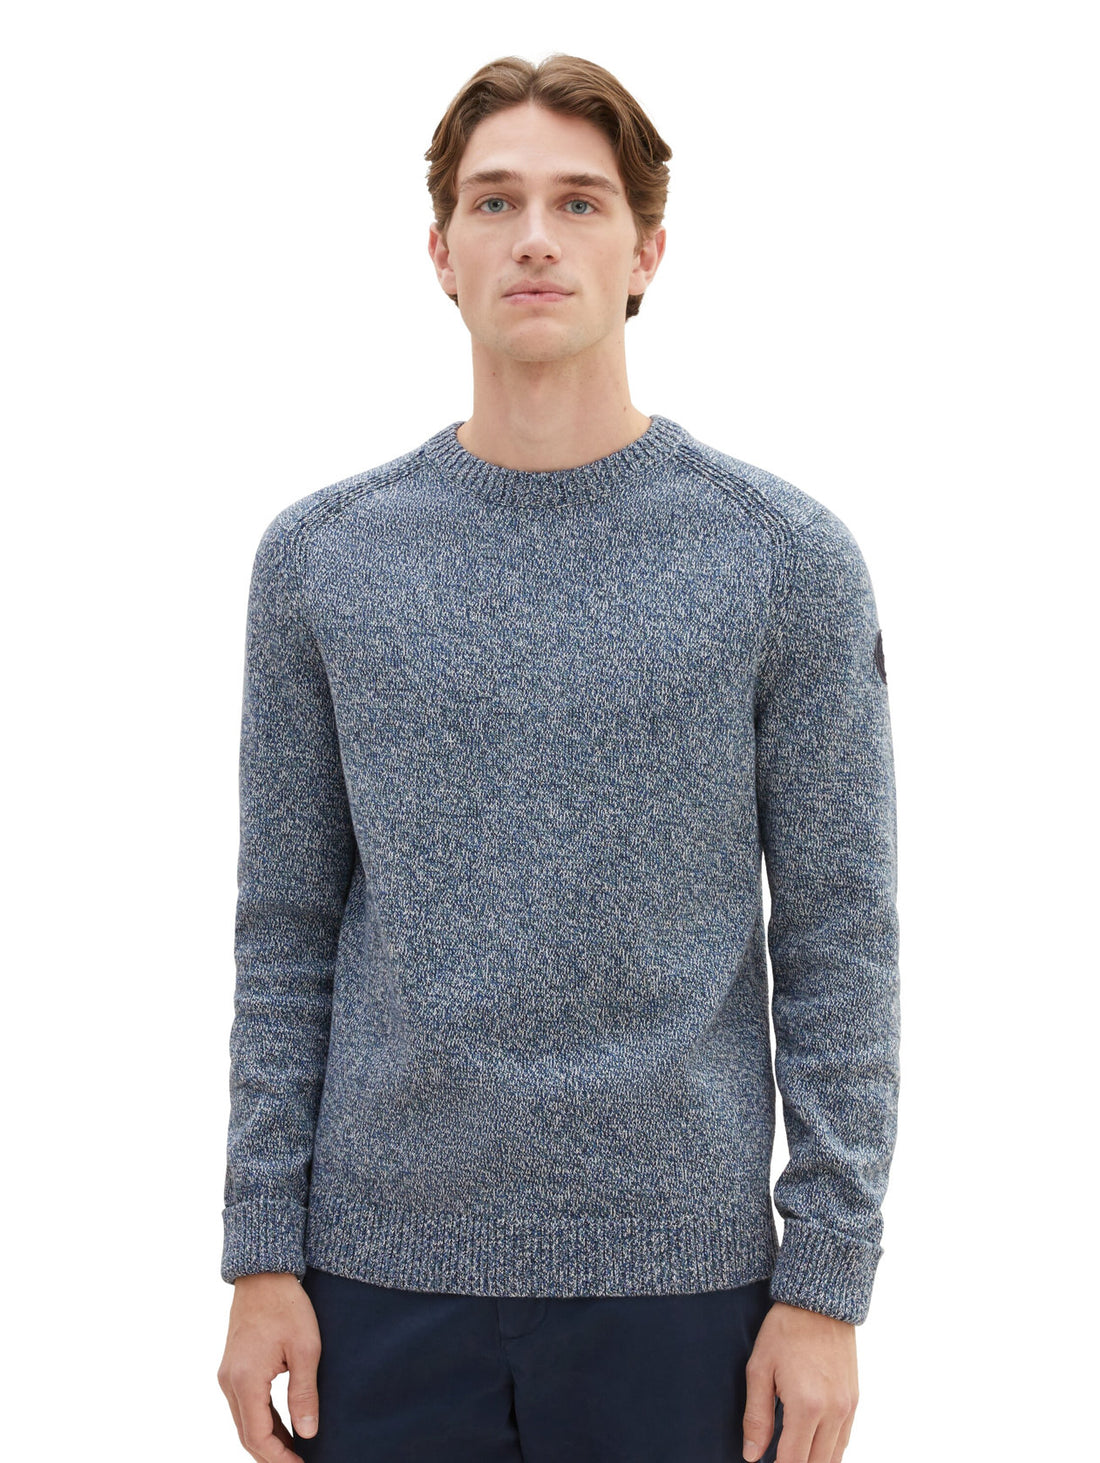 Knitted Sweater With Round Neckline_1038246_32741_05